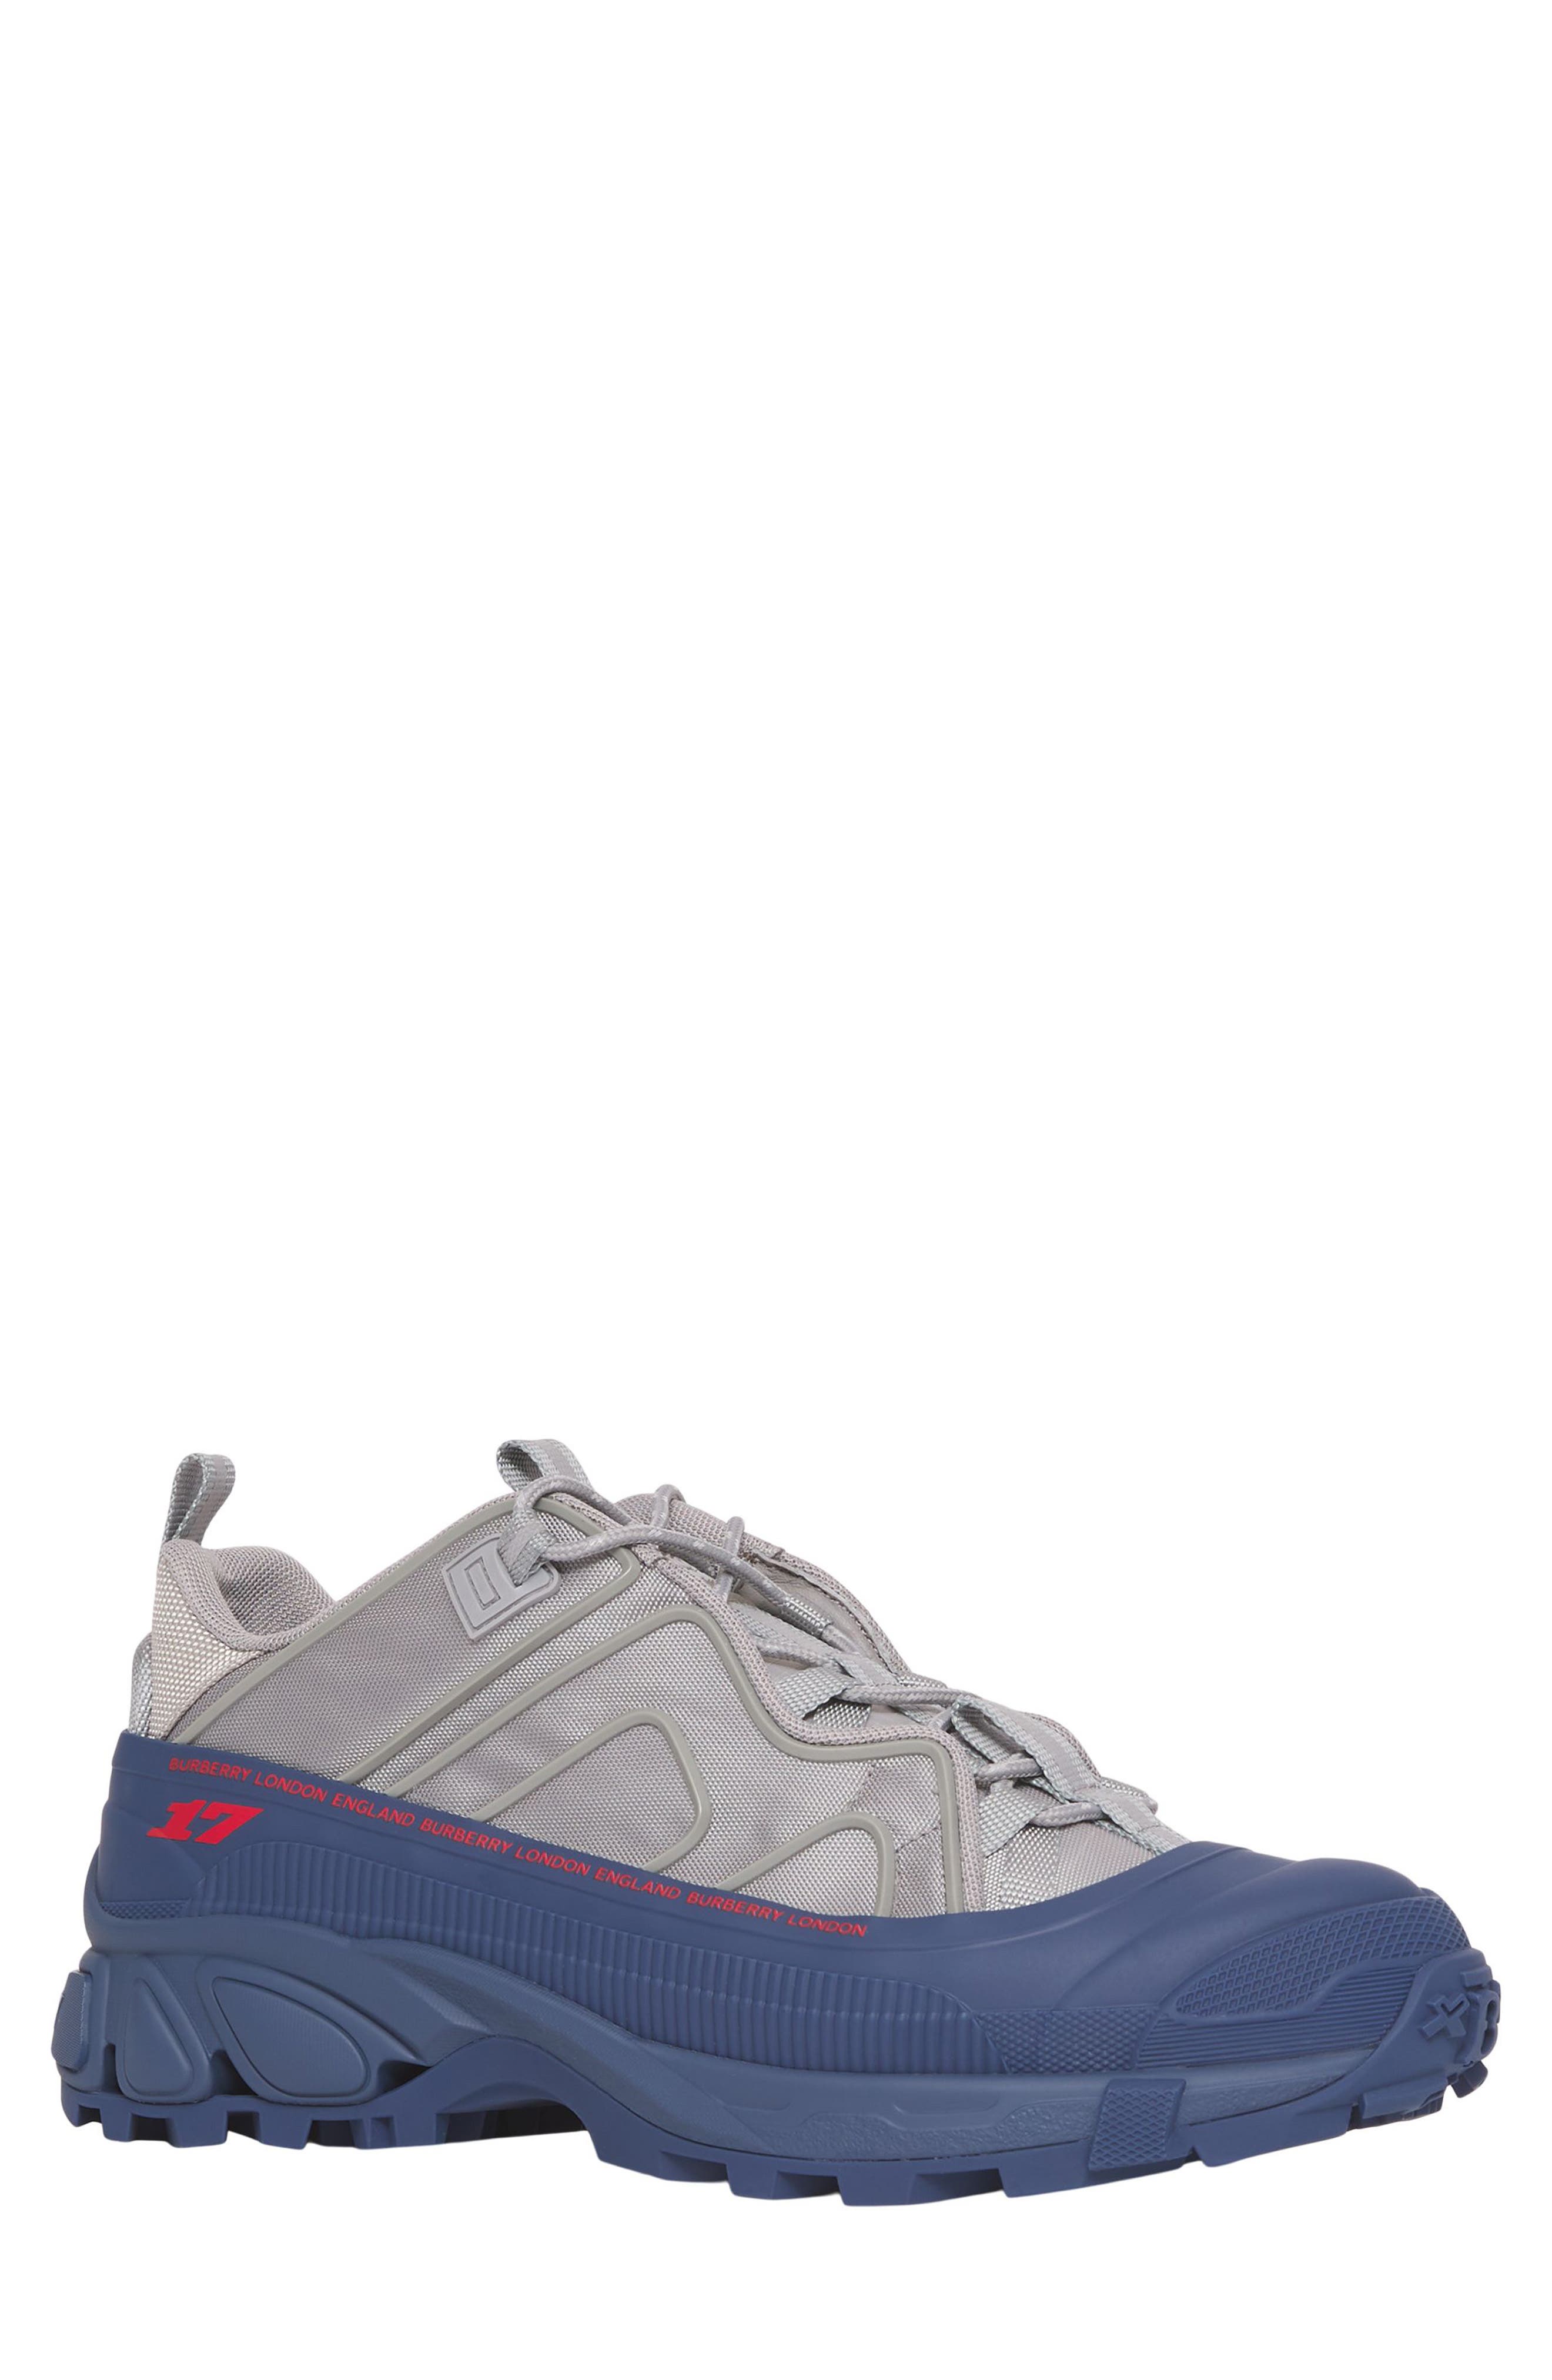 Burberry Arthur Bicolor Low Top Sneaker in Warm Grey/Oceanic Bl